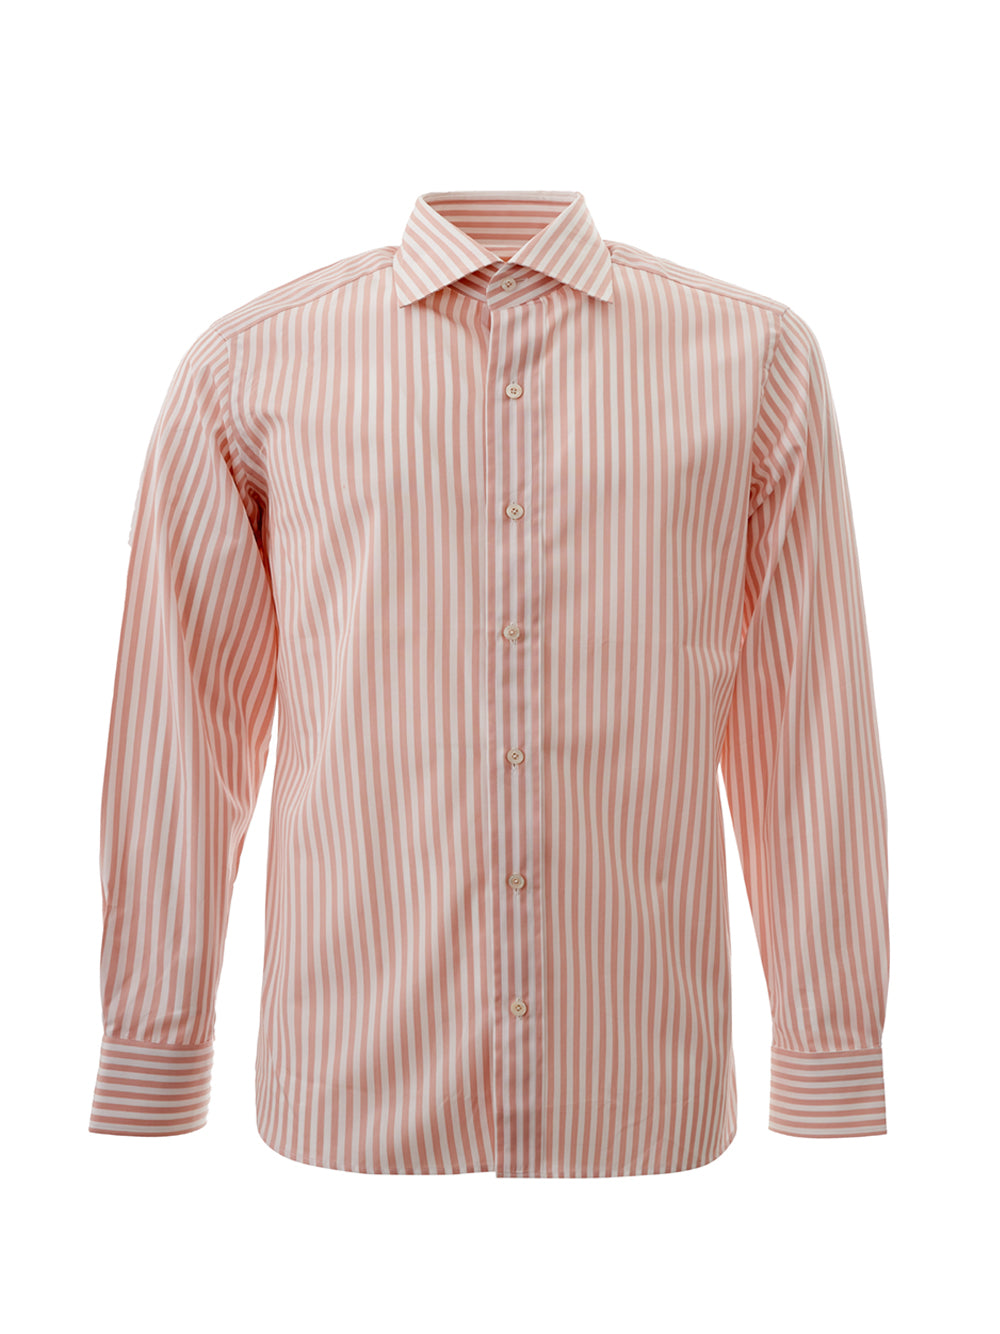 Tom Ford pink striped shirt